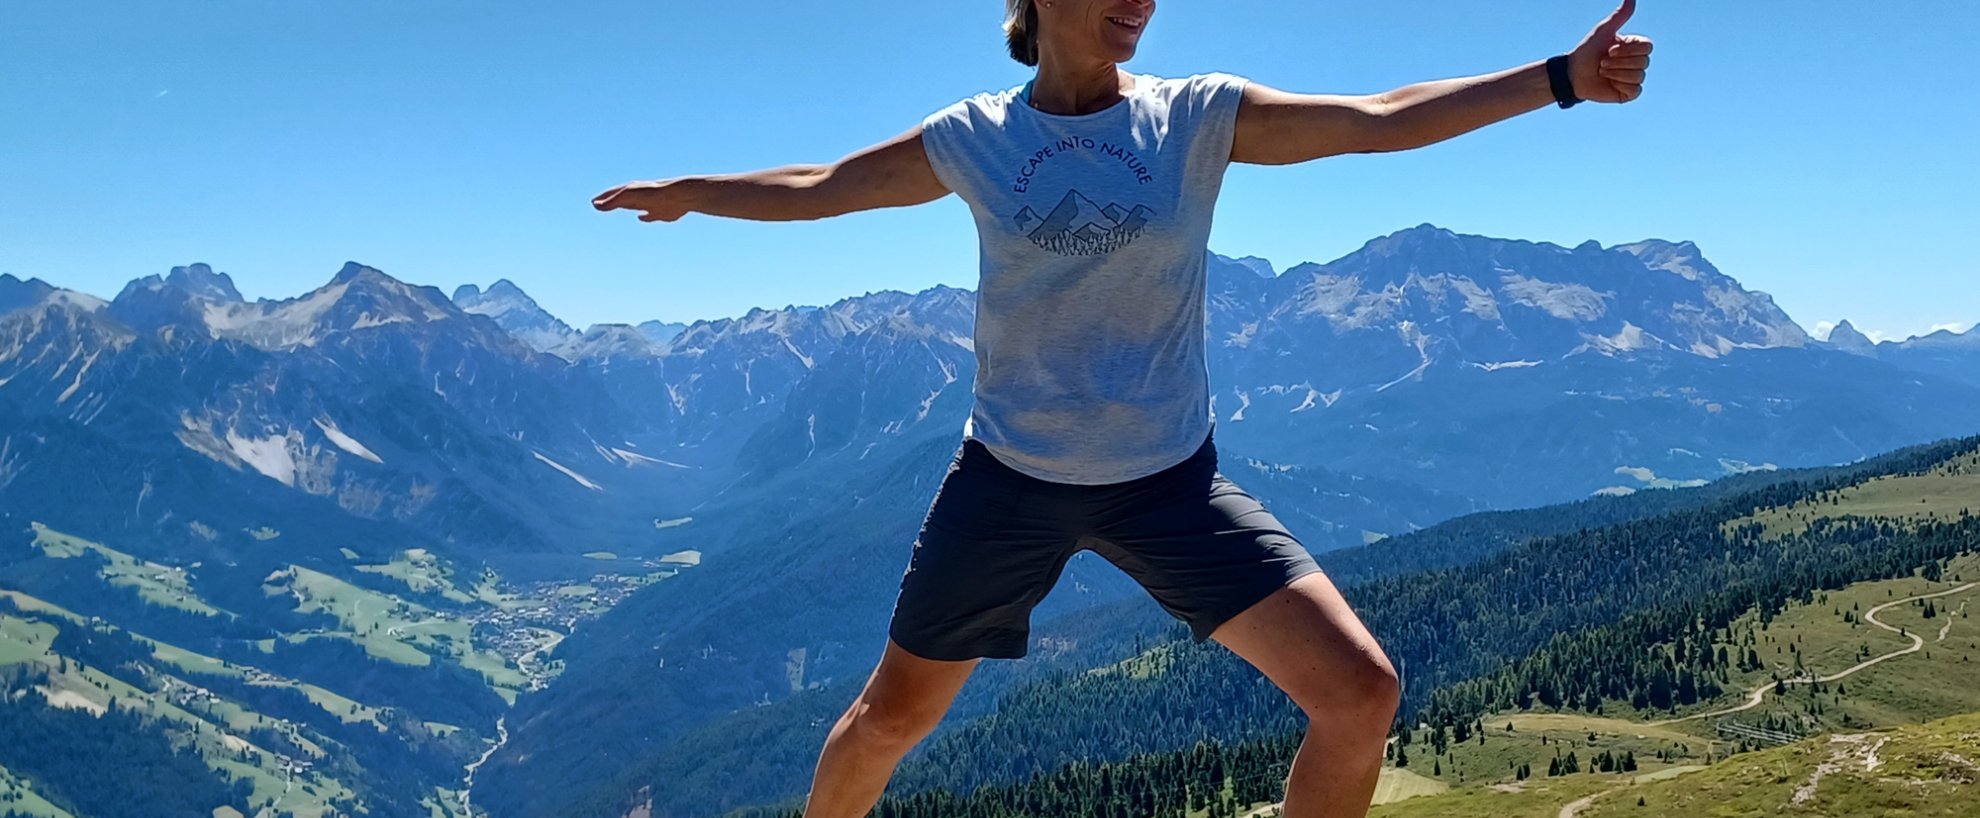 yoga urlaub reisen italien suedtirol hotel gasthof saalerwirt pose berge